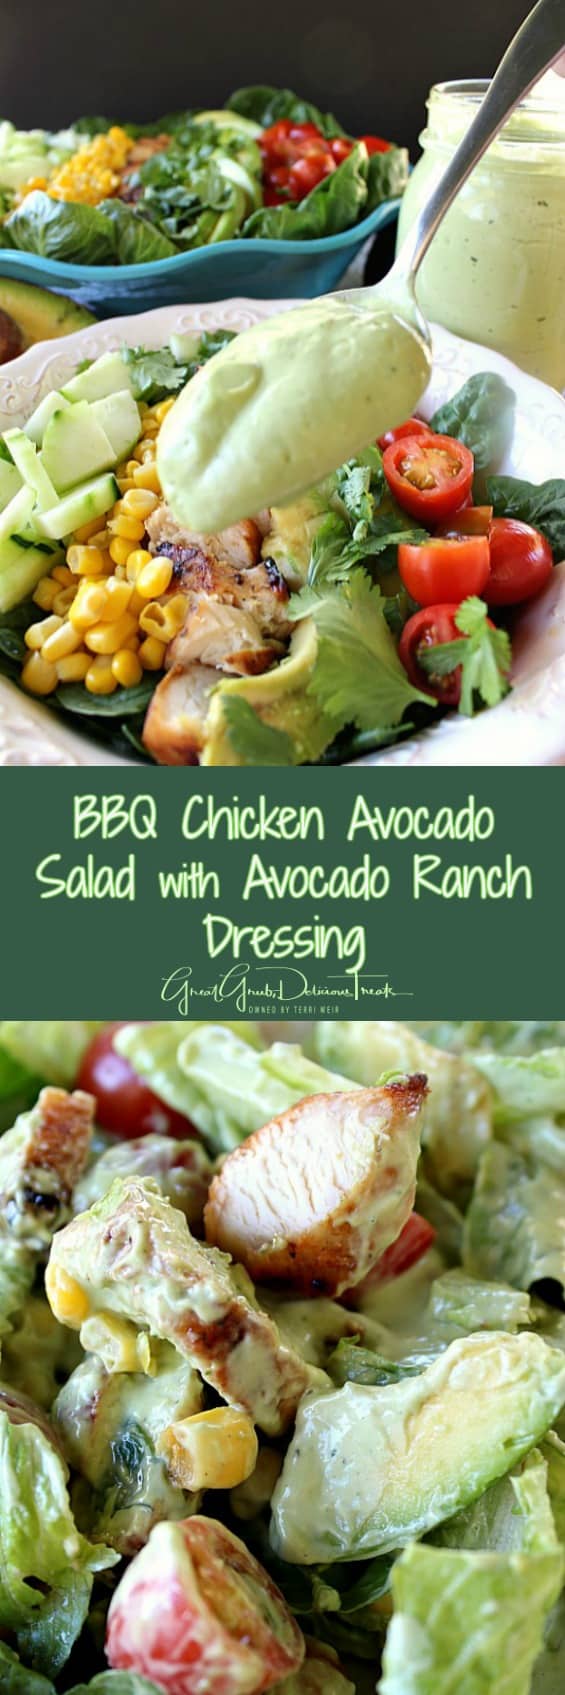 BBQ Chicken Avocado Salad with Avocado Ranch Dressing